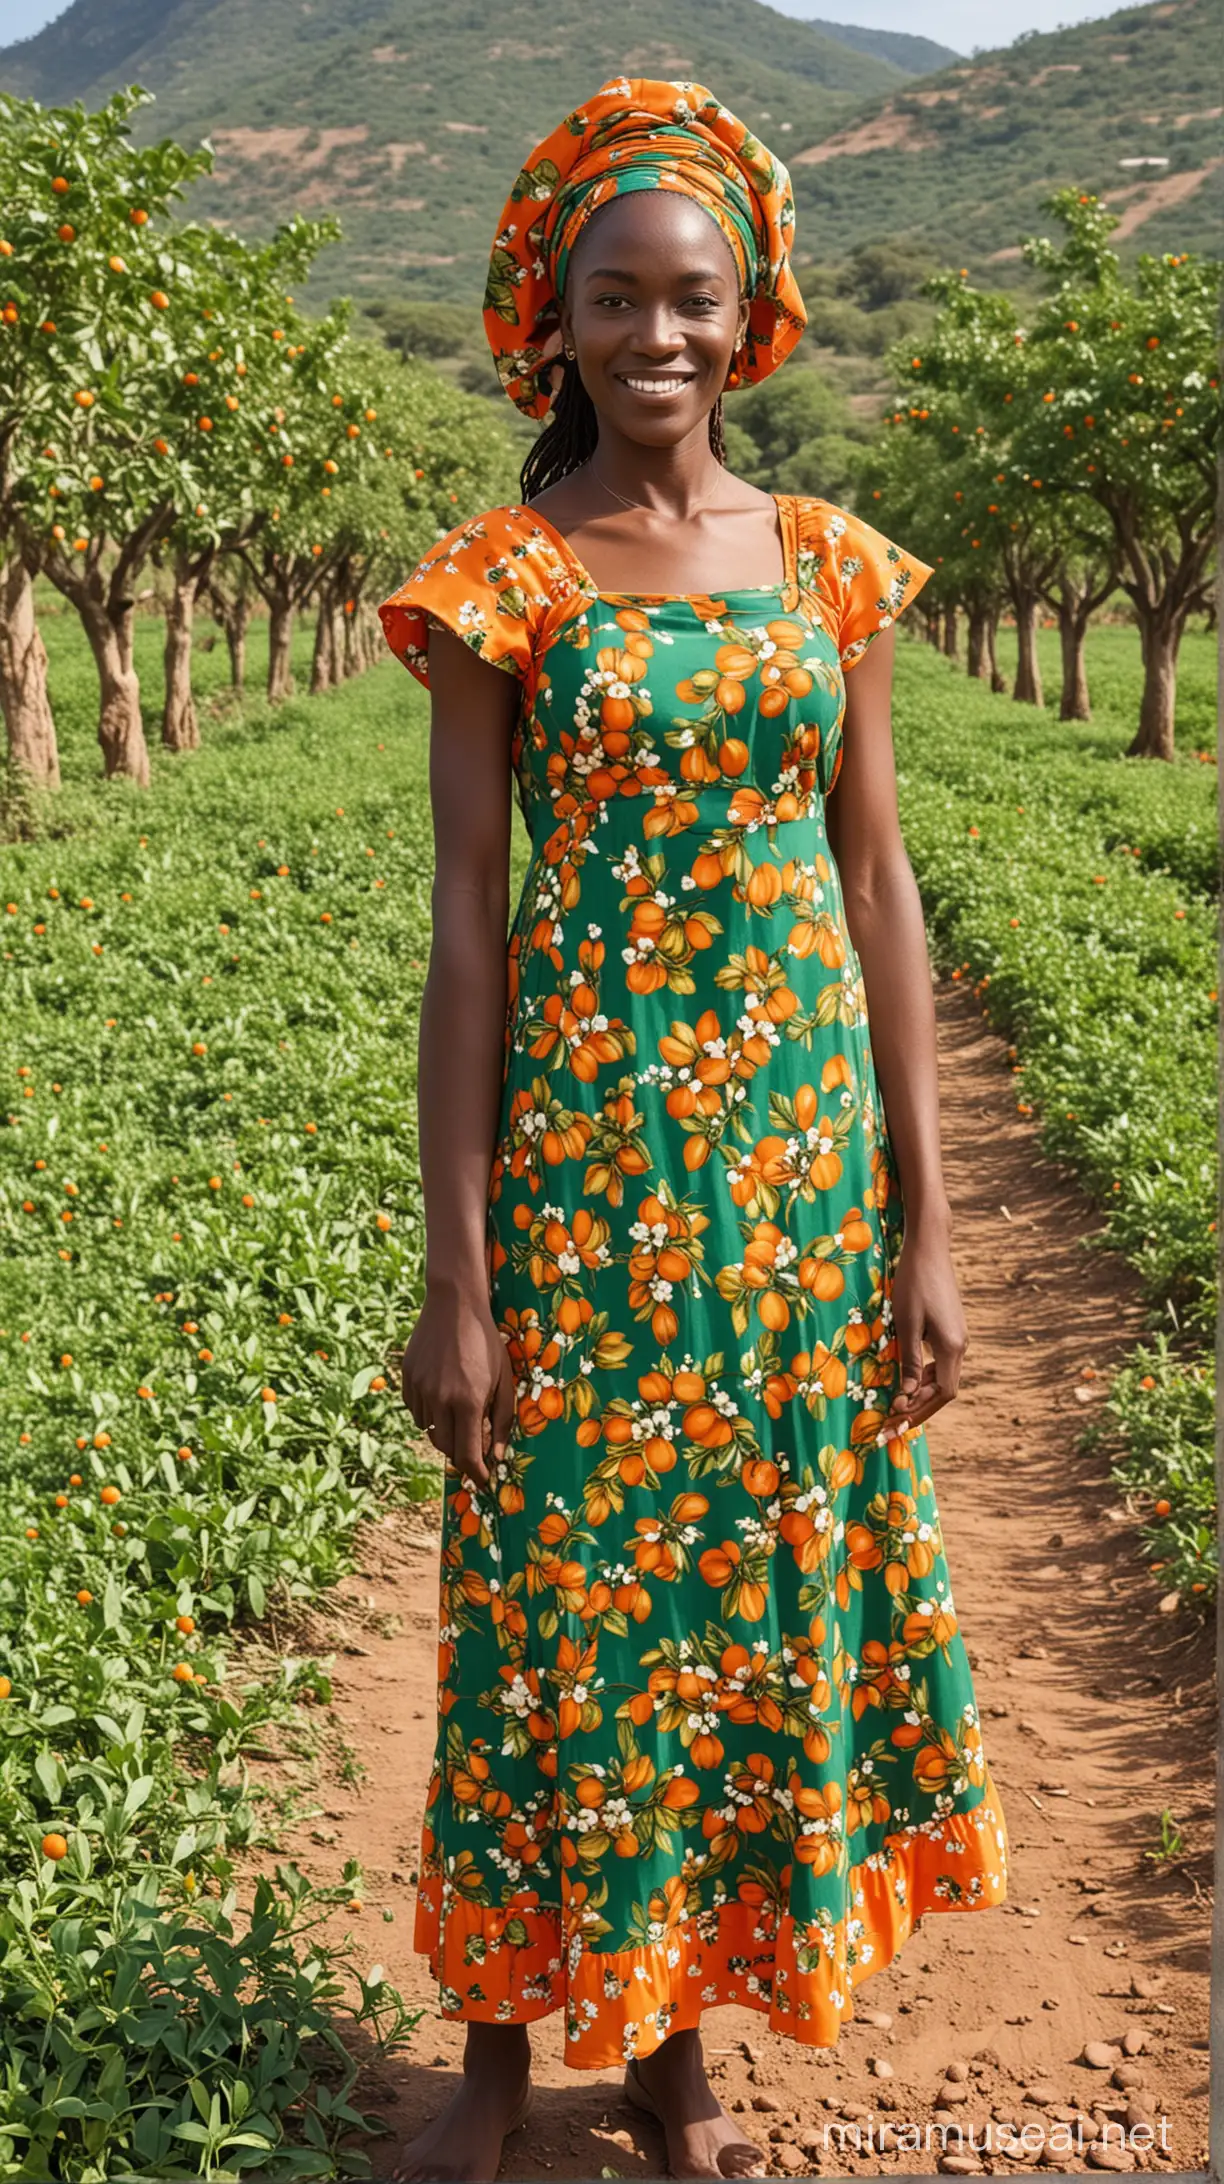 Female Shea Nut Farmer in Vibrant Green and Orange Traditional Dress